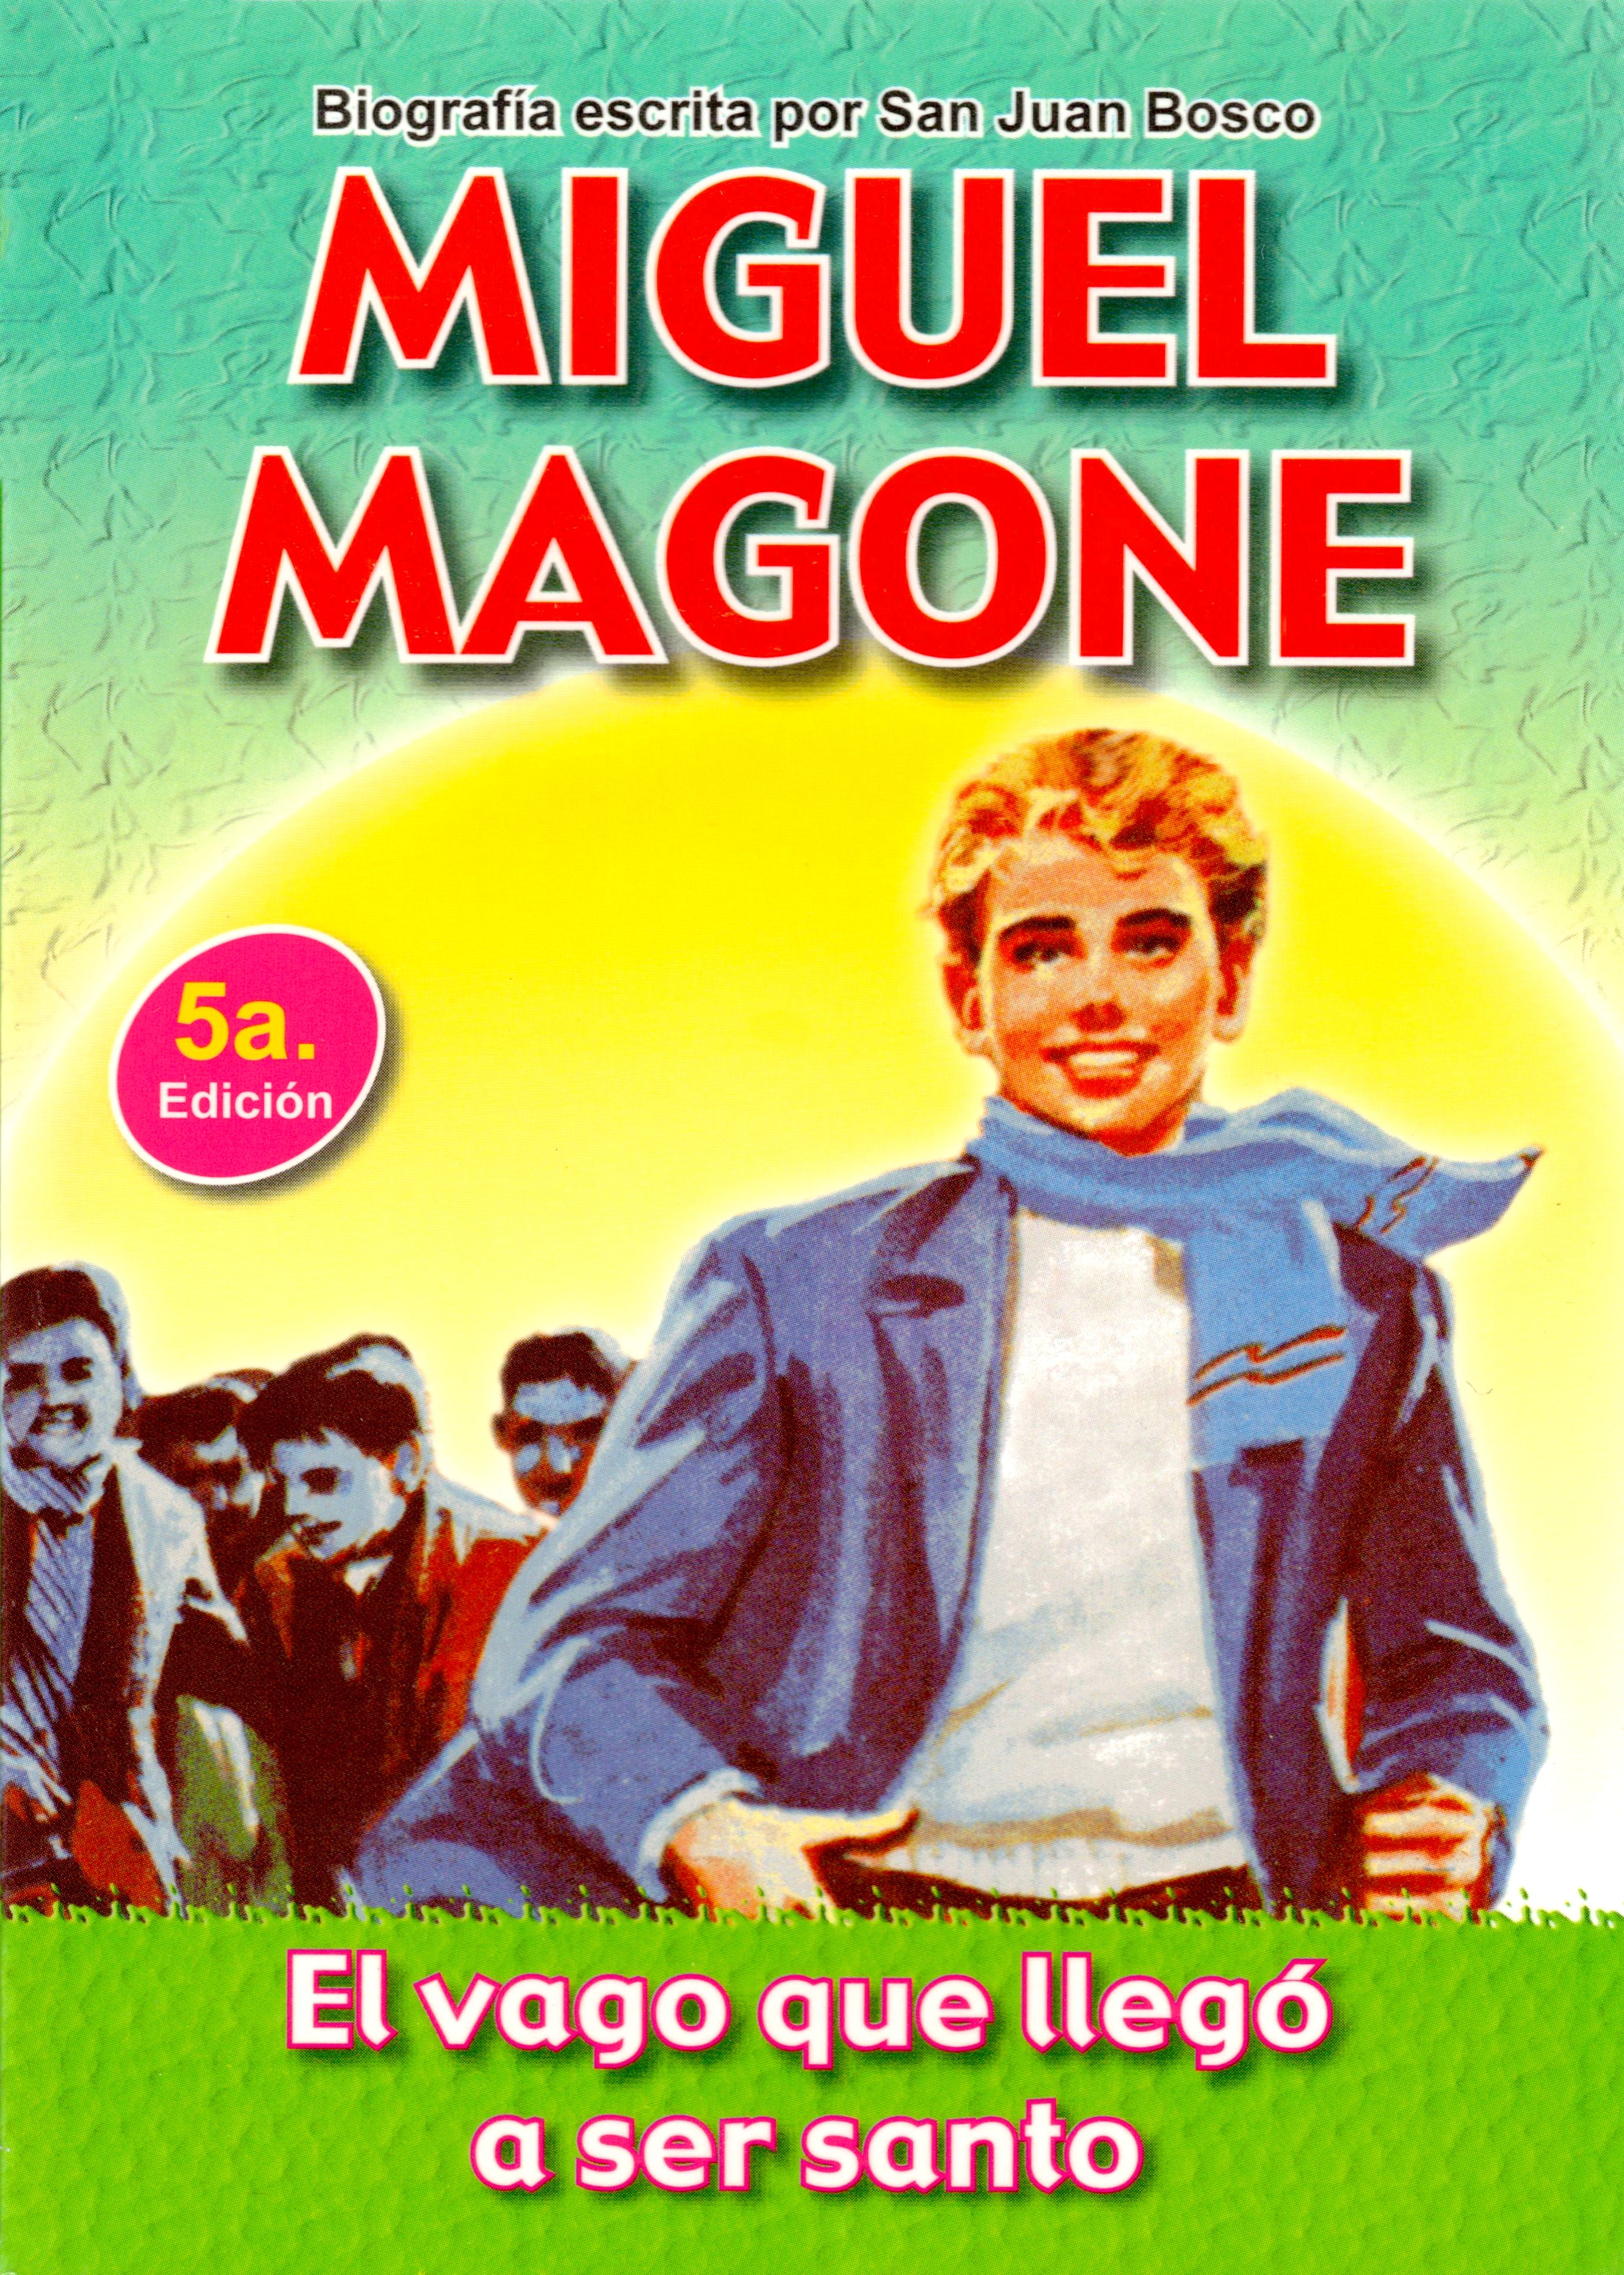 Miguel Magone